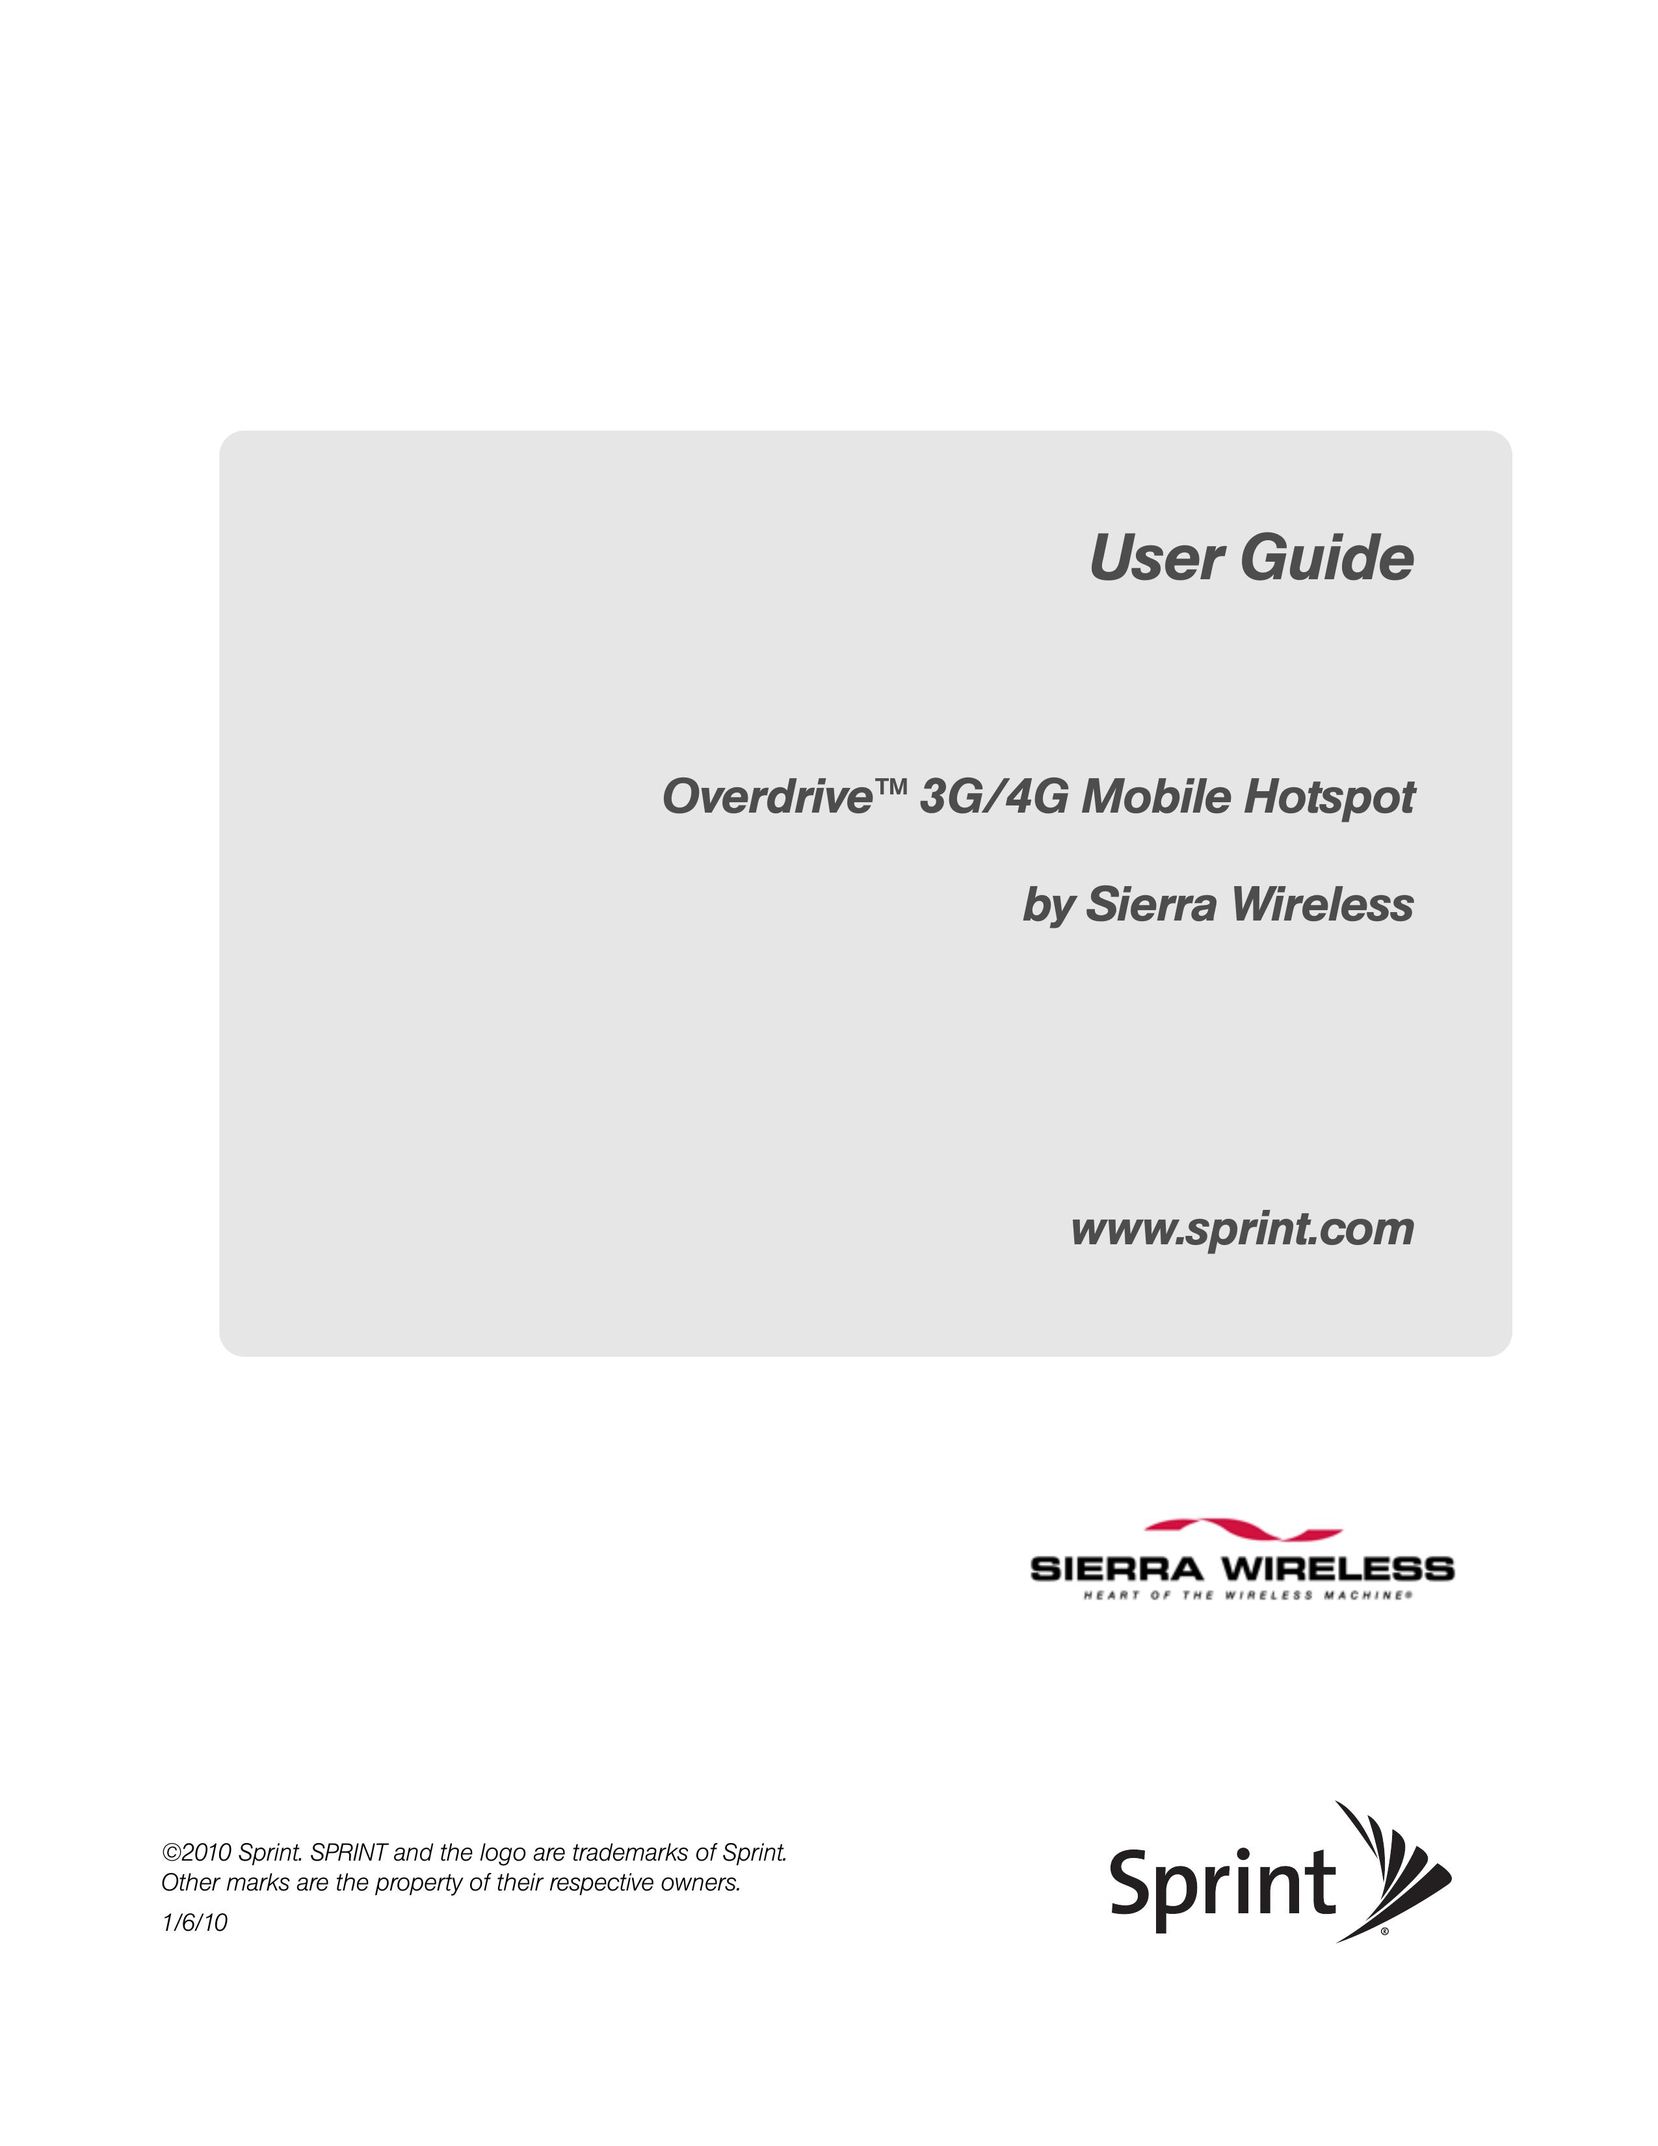 Sierra Wireless Overdrive Network Router User Manual